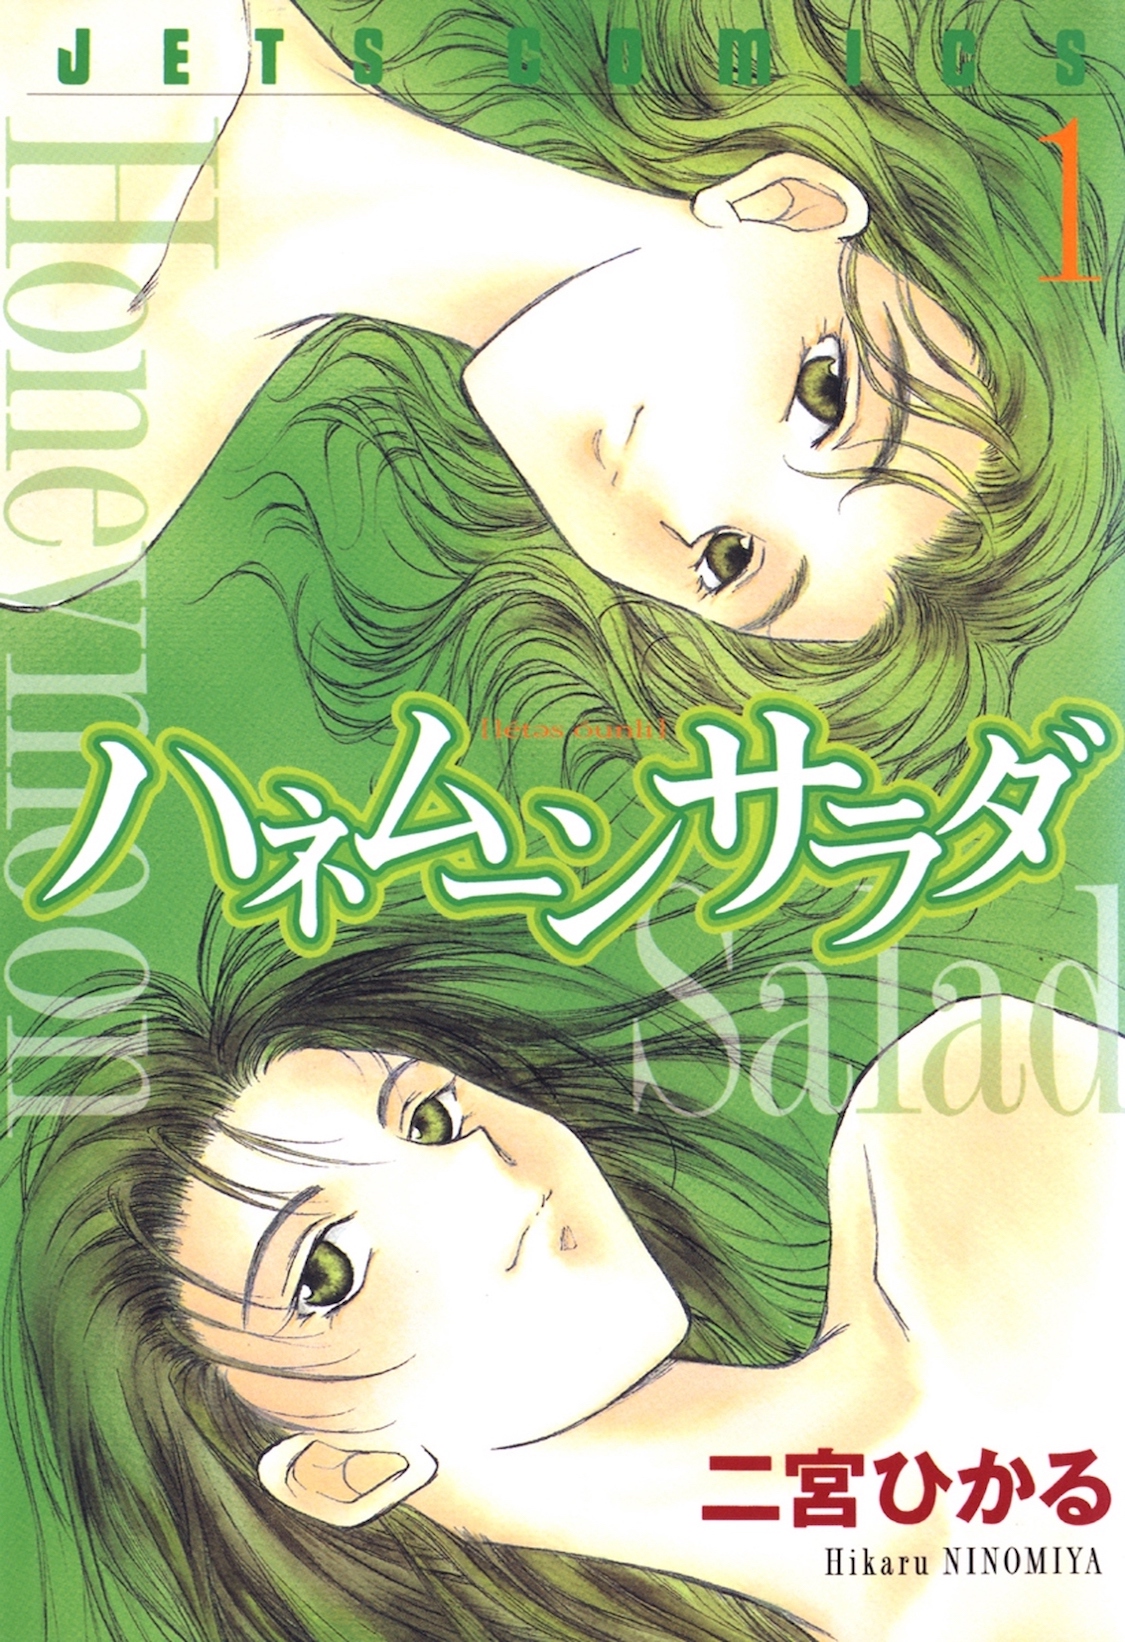 Honeymoon salad manga